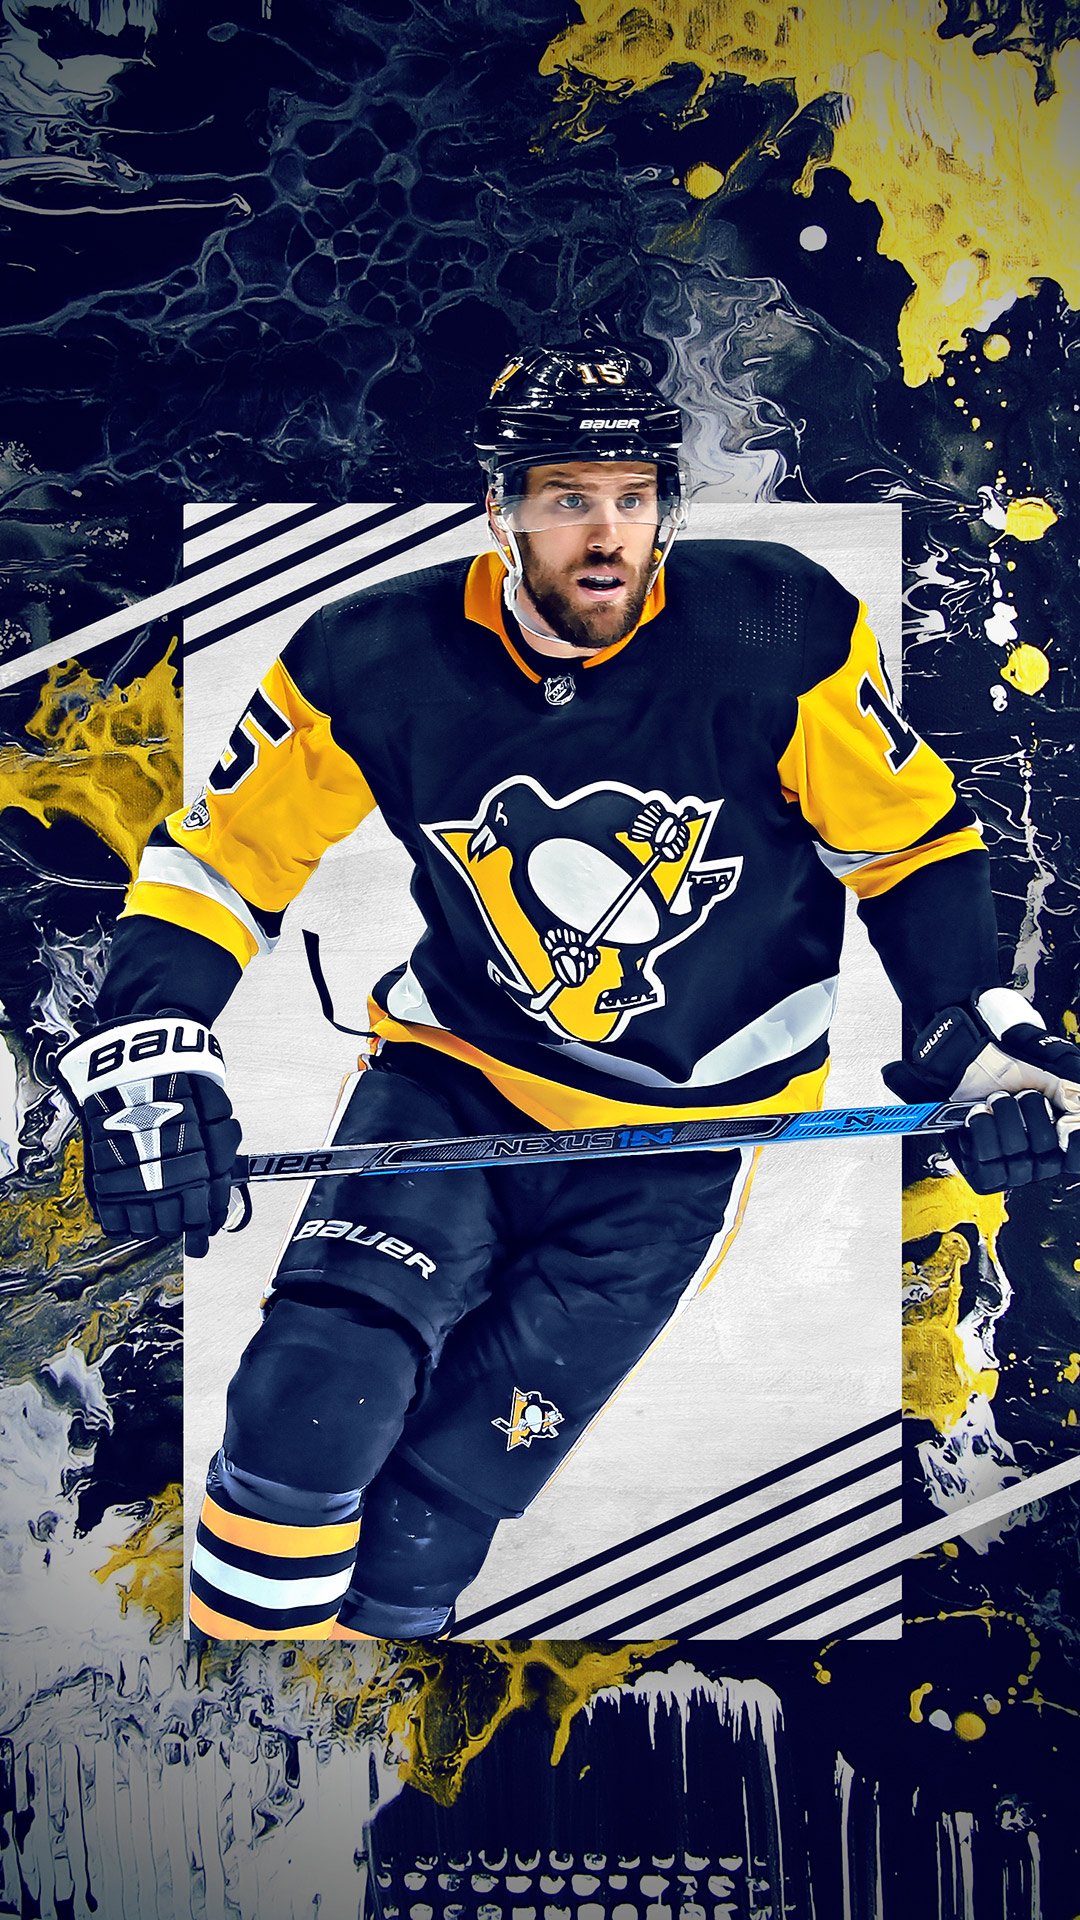 Pittsburgh Penguins on Twitter  Pittsburgh penguins wallpaper, Hockey  posters, Nhl wallpaper